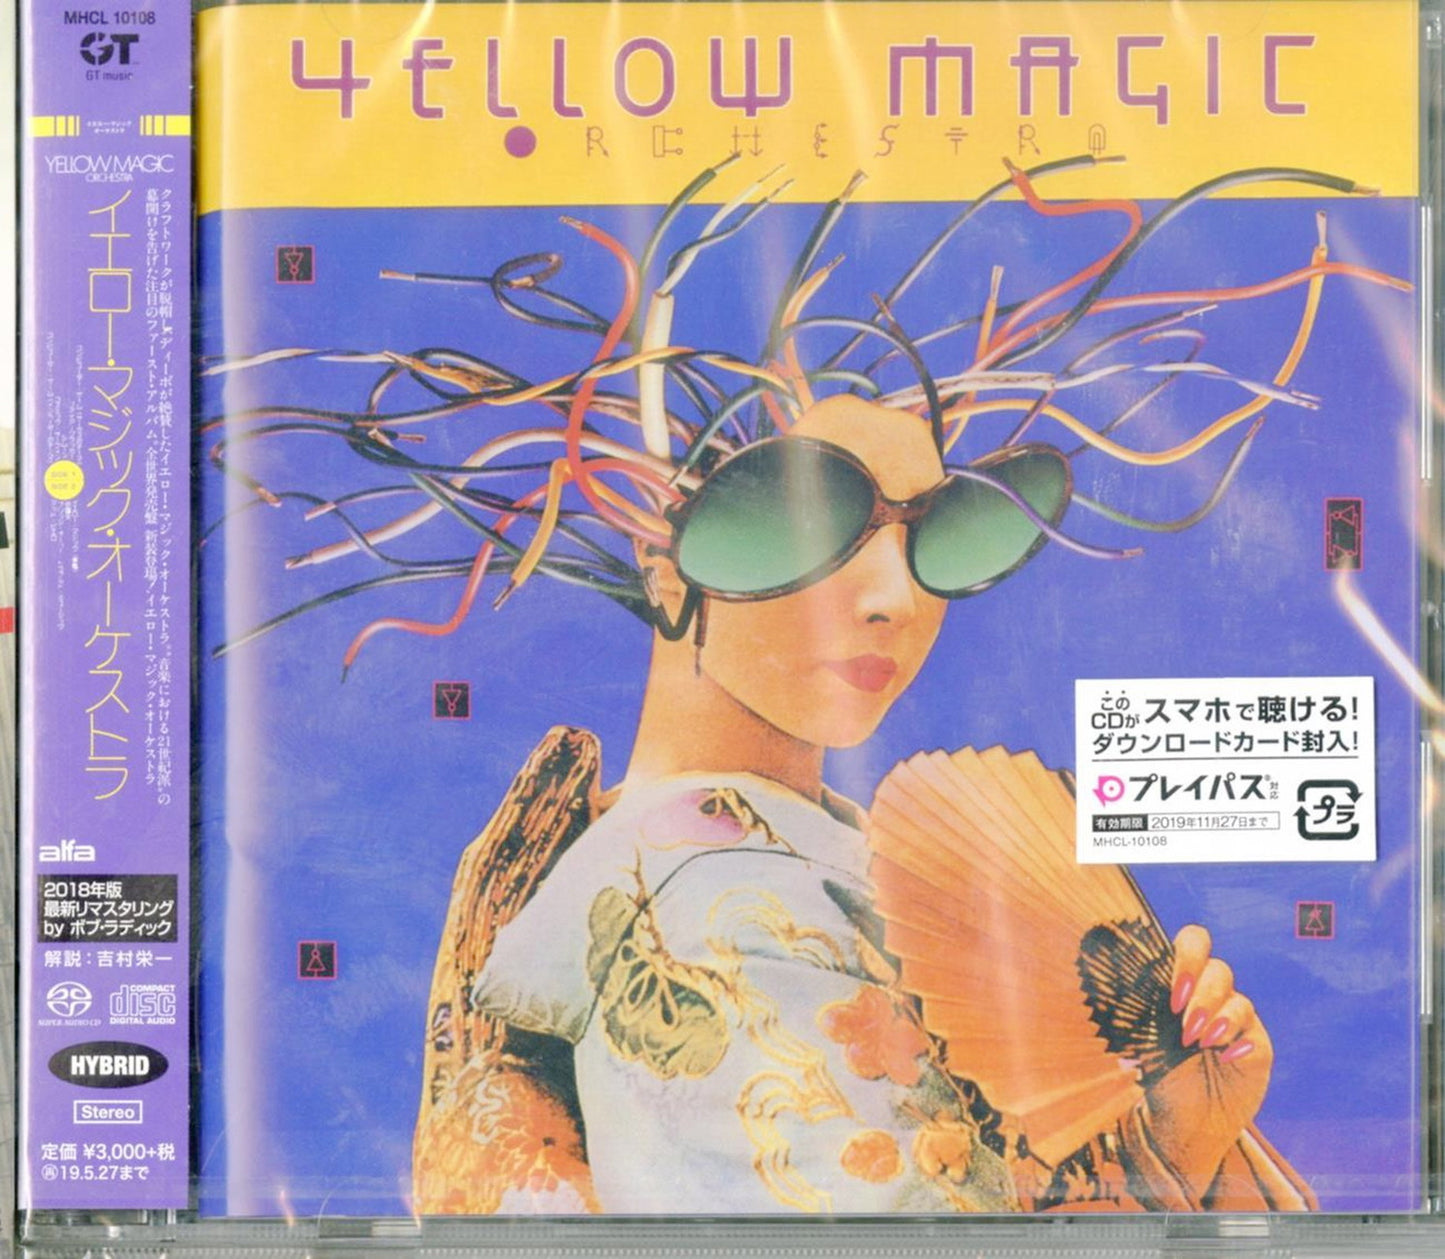 Yellow Magic Orchestra - Yellow Magic Orchestra Us Version - Japan  SACD Hybrid Limited Edition